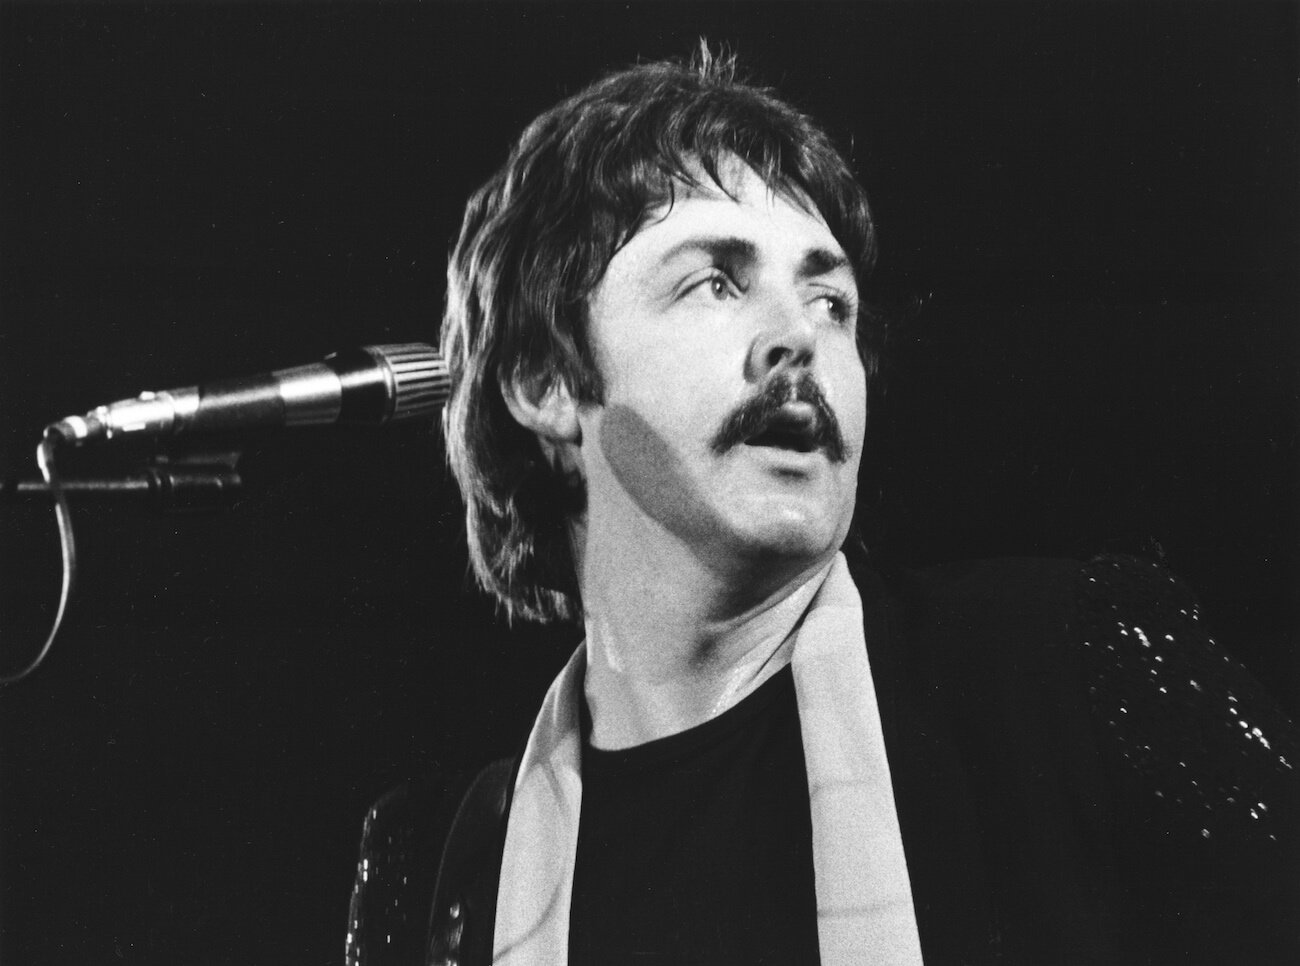 Paul McCartney and Wings performing in 1976. 